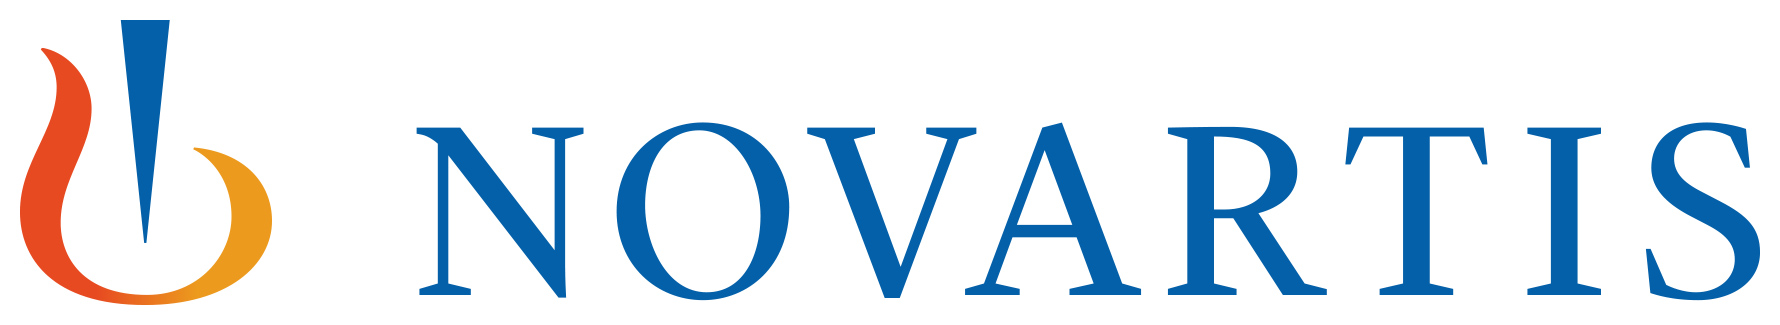 Novartis Logo (medium)